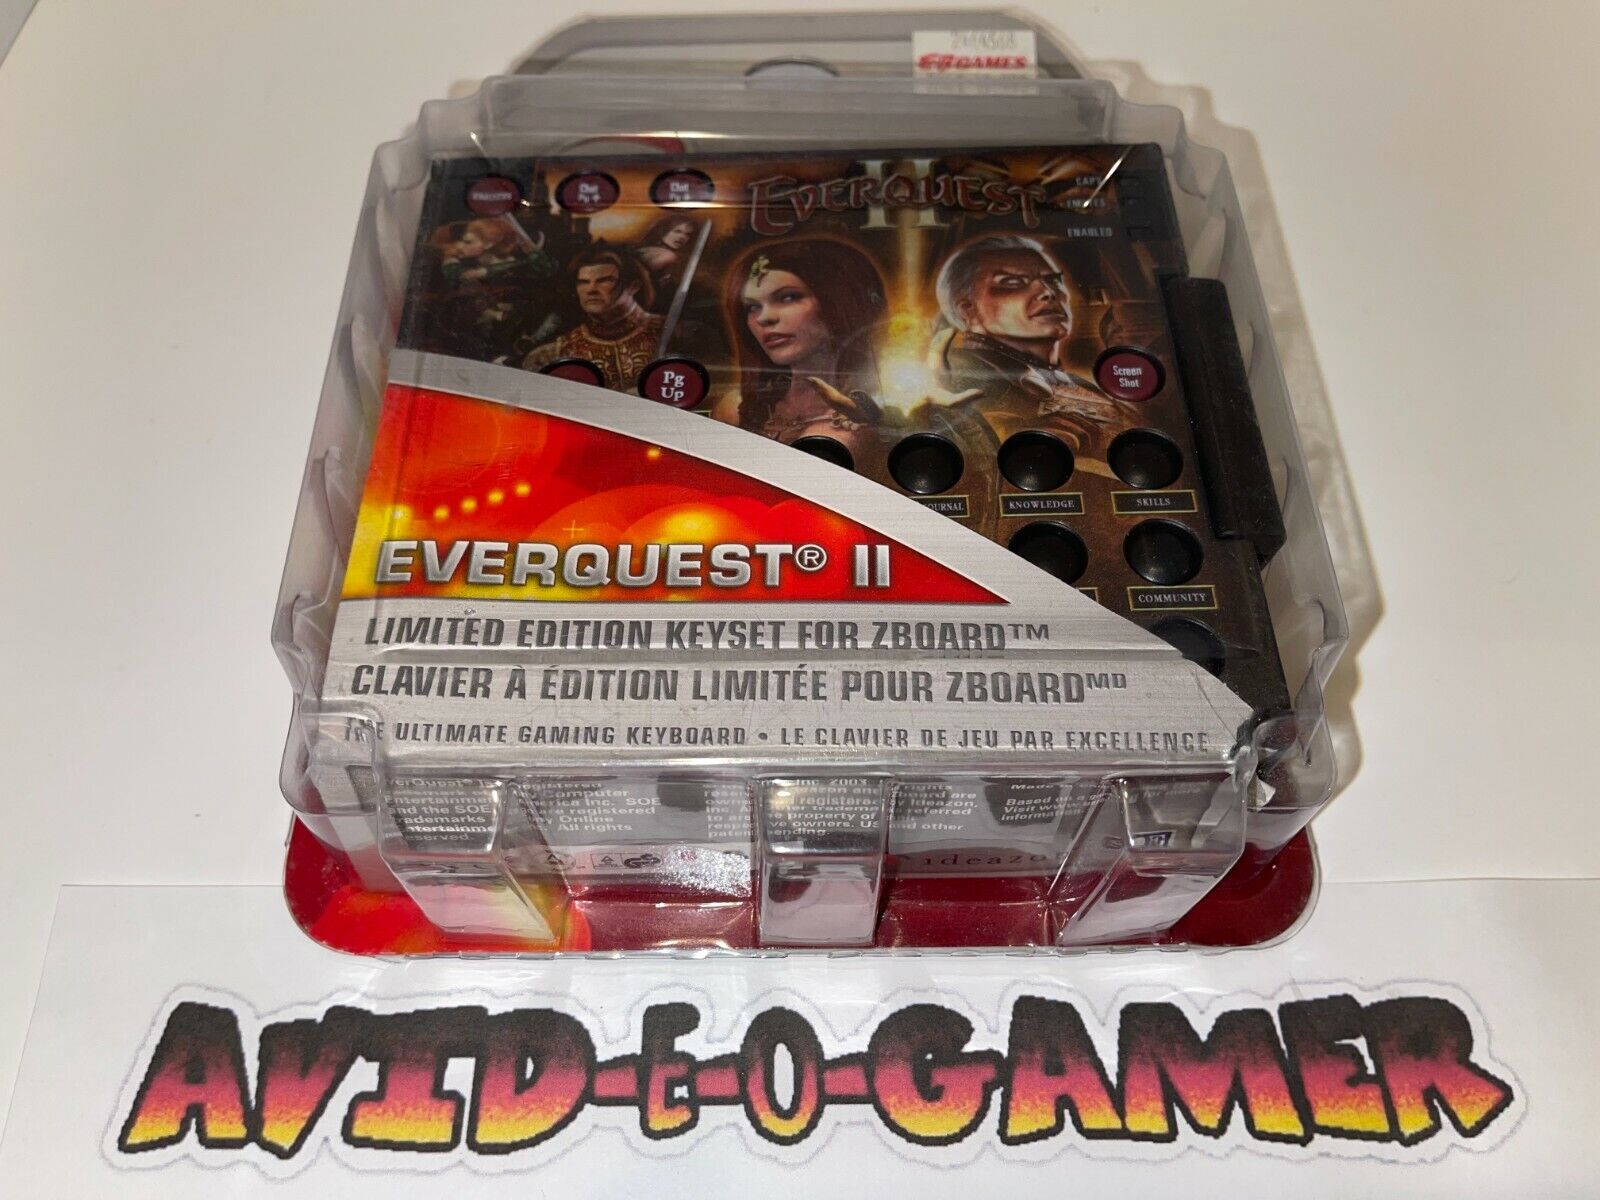 Everquest II 2 Zboard Limited Edition Gaming Keyboard Keyset NEW